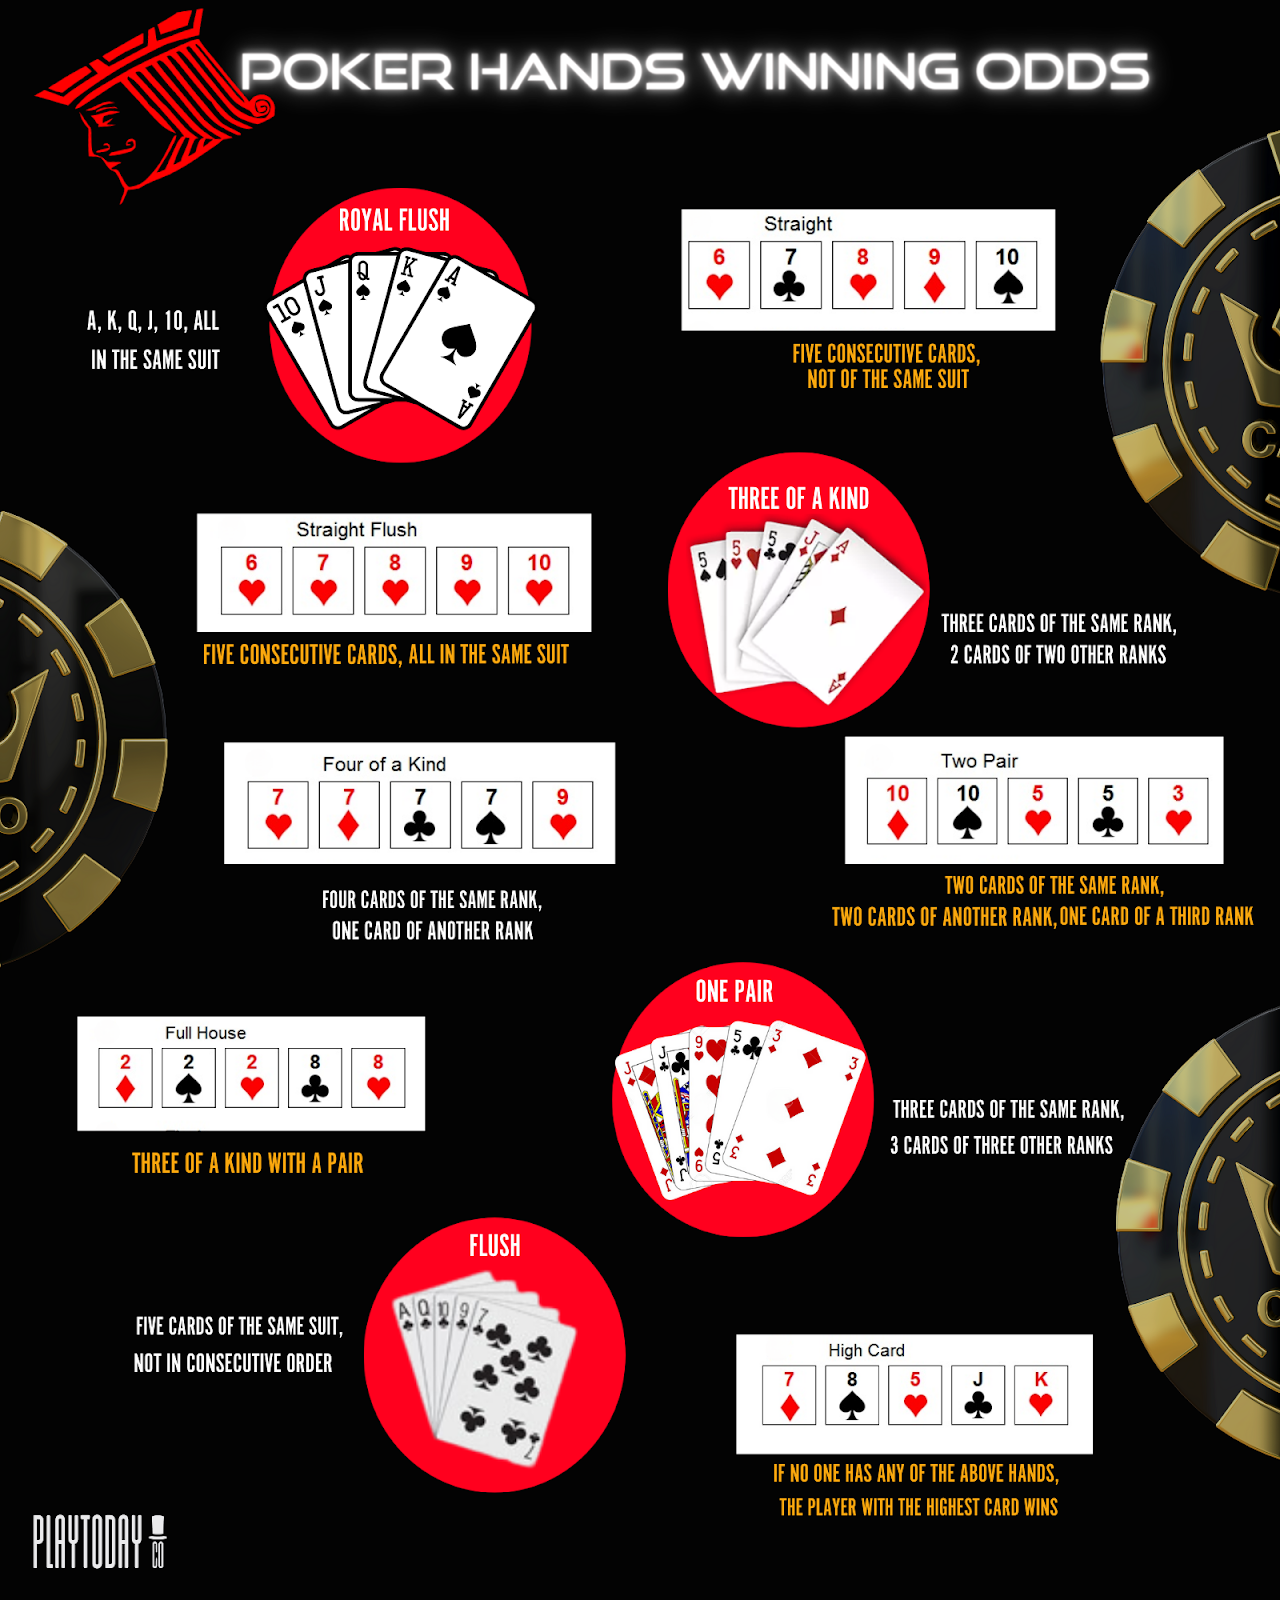 Poker hands winning odds visualizer 